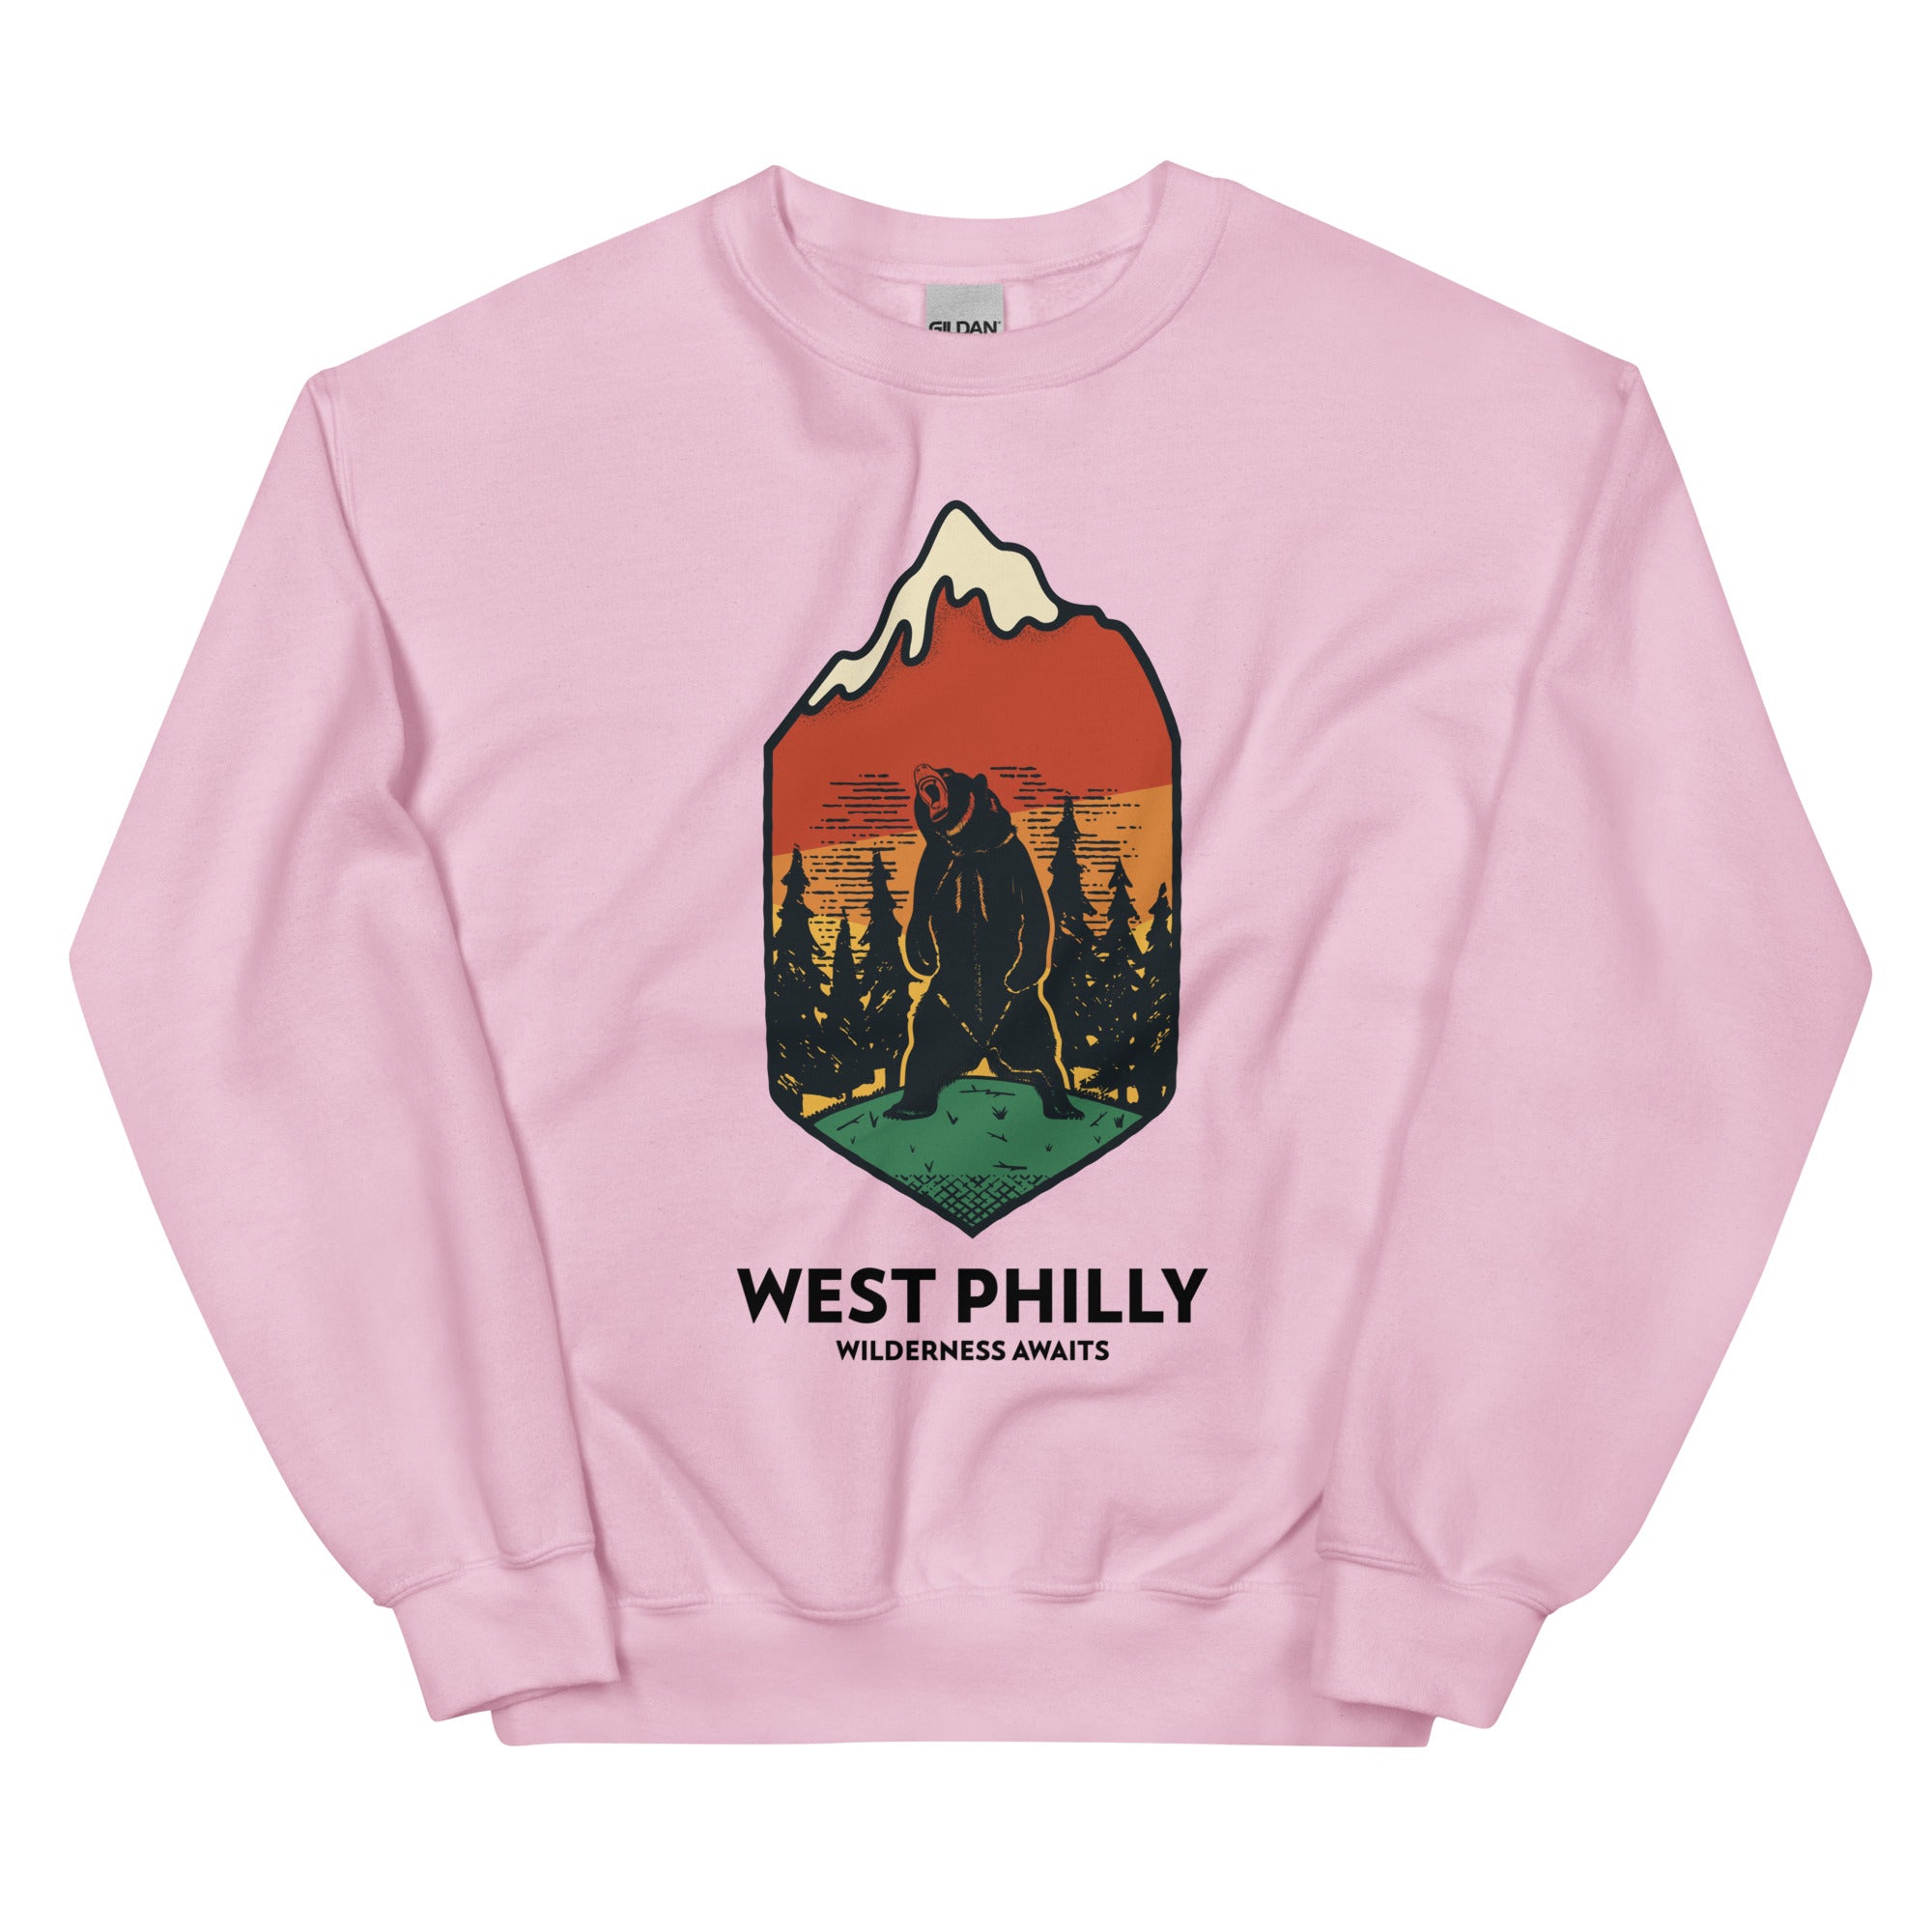 West Philly Wilderness Philadelphia outdoors pink sweatshirt Phillygoat